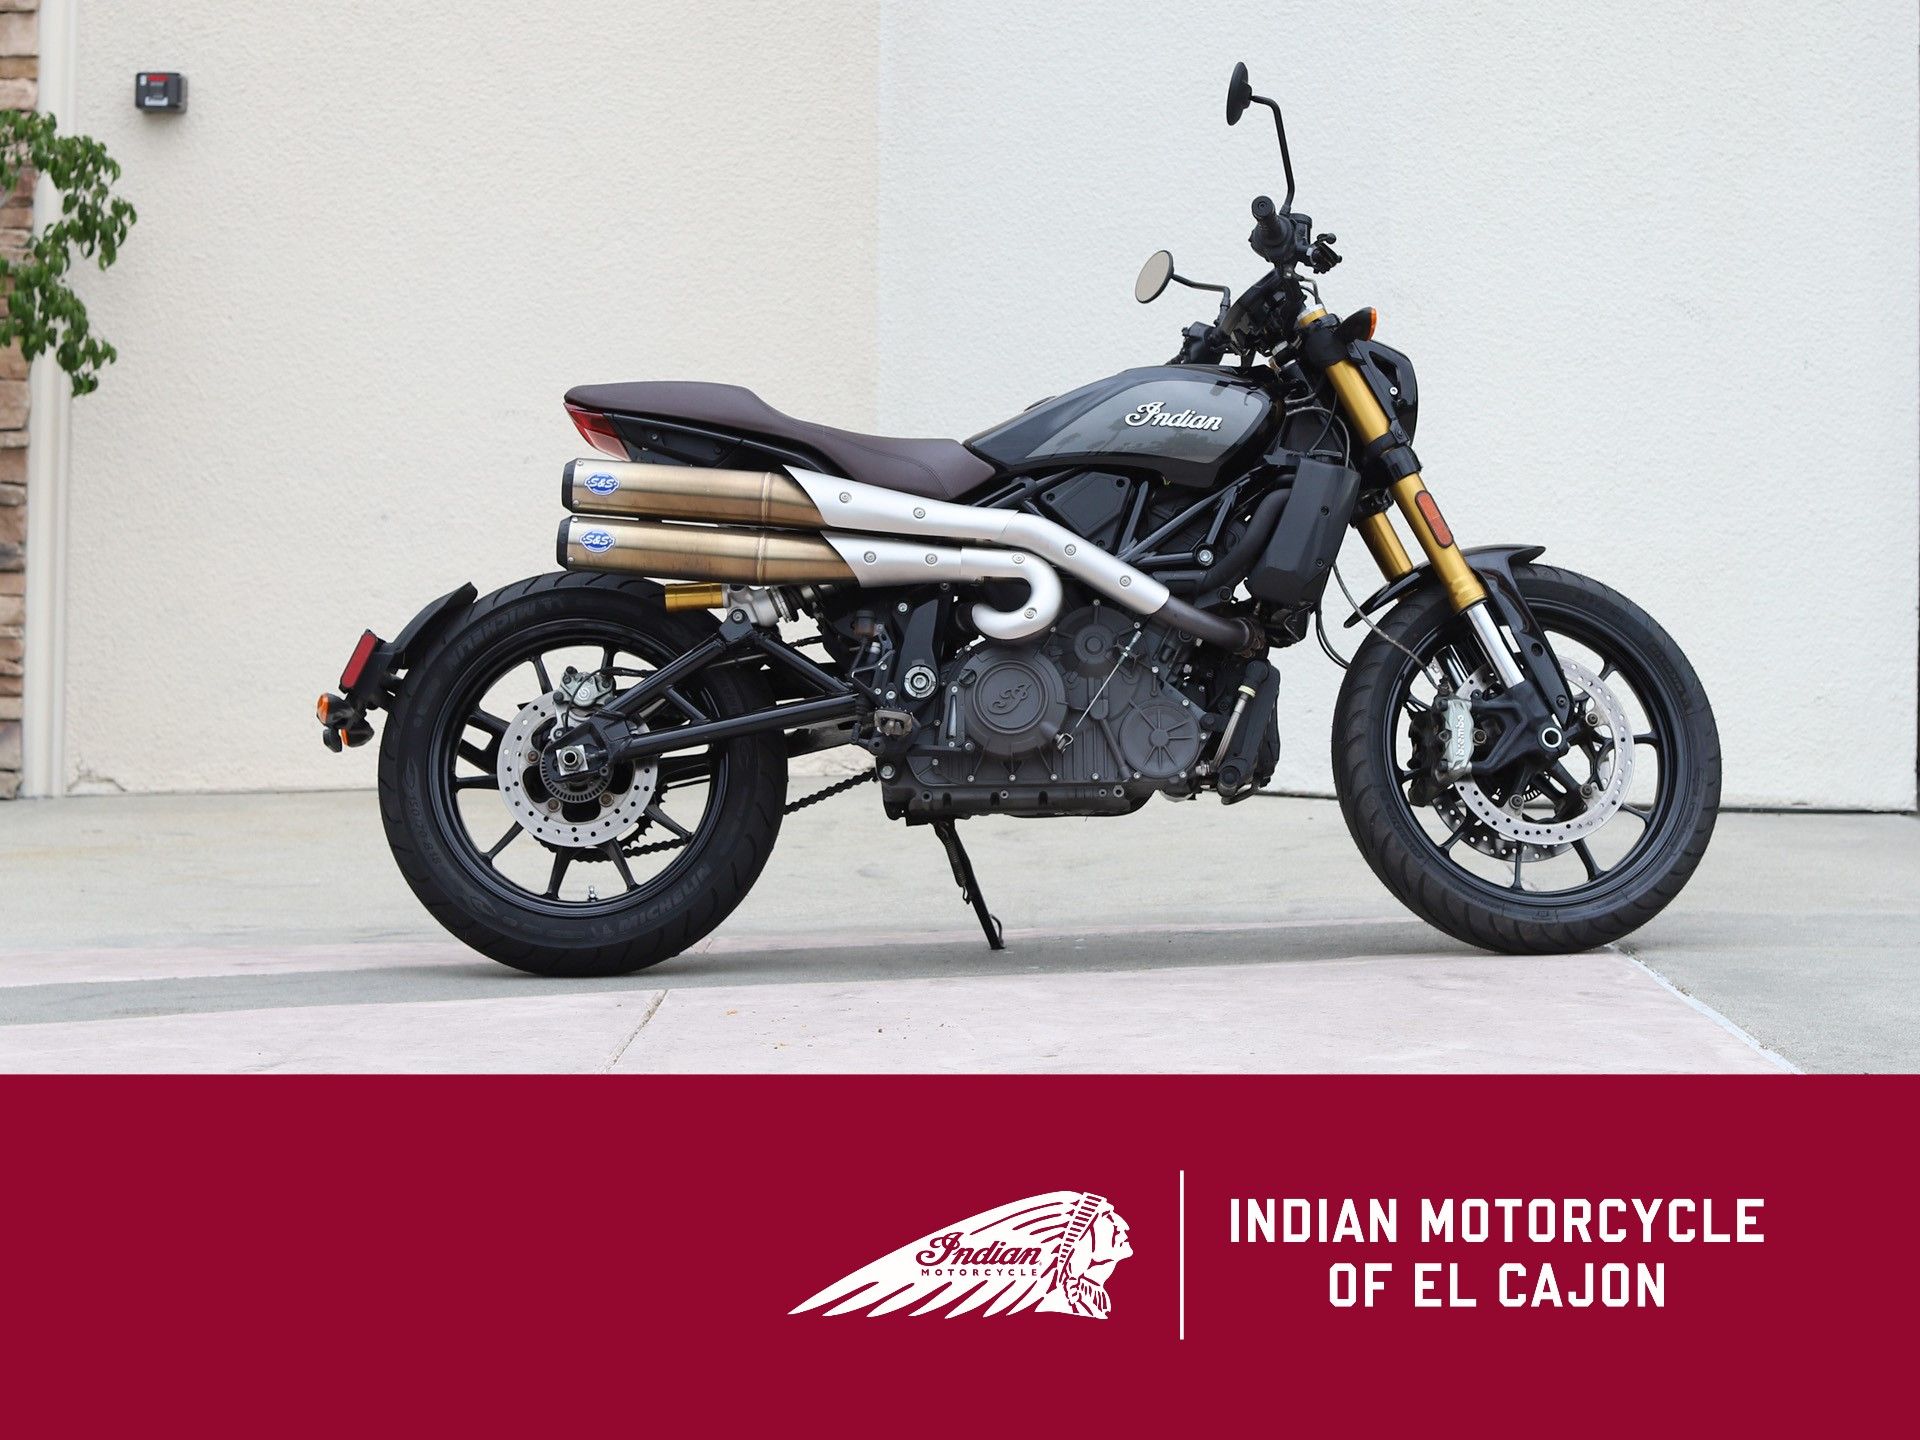 2019 Indian Motorcycle FTR™ 1200 S in EL Cajon, California - Photo 1